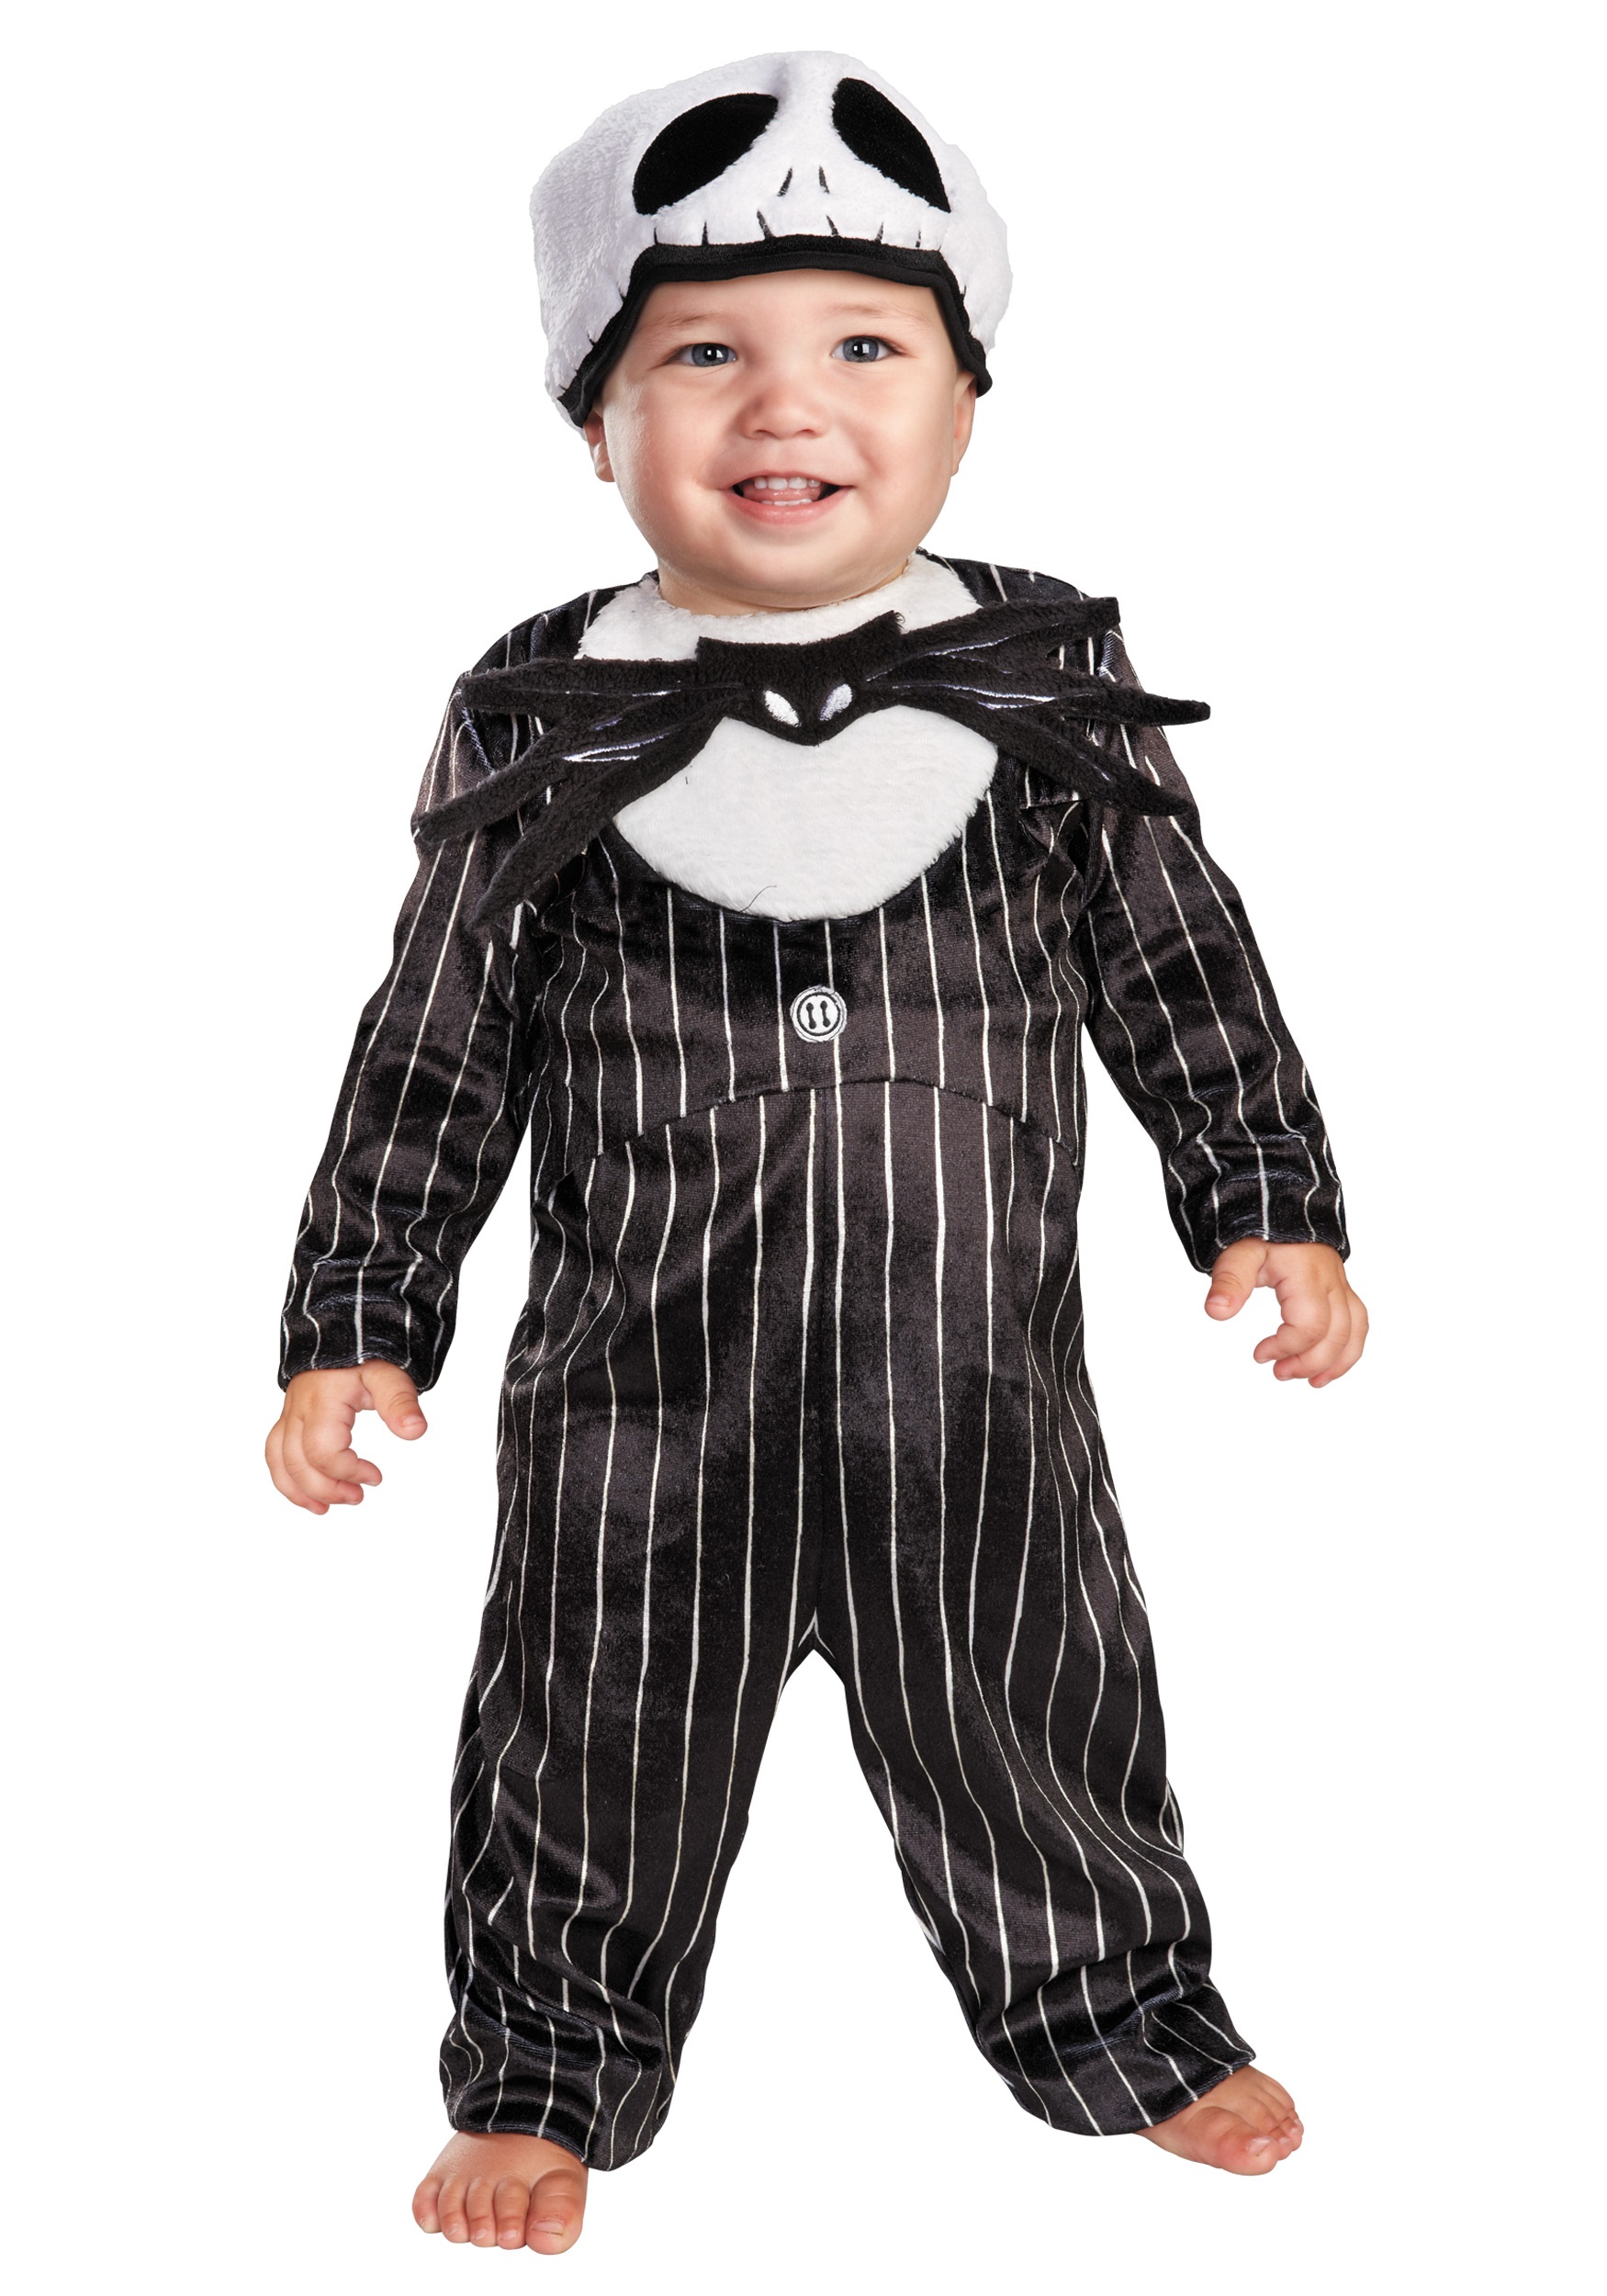 Prestige Infant Jack Skellington Costume